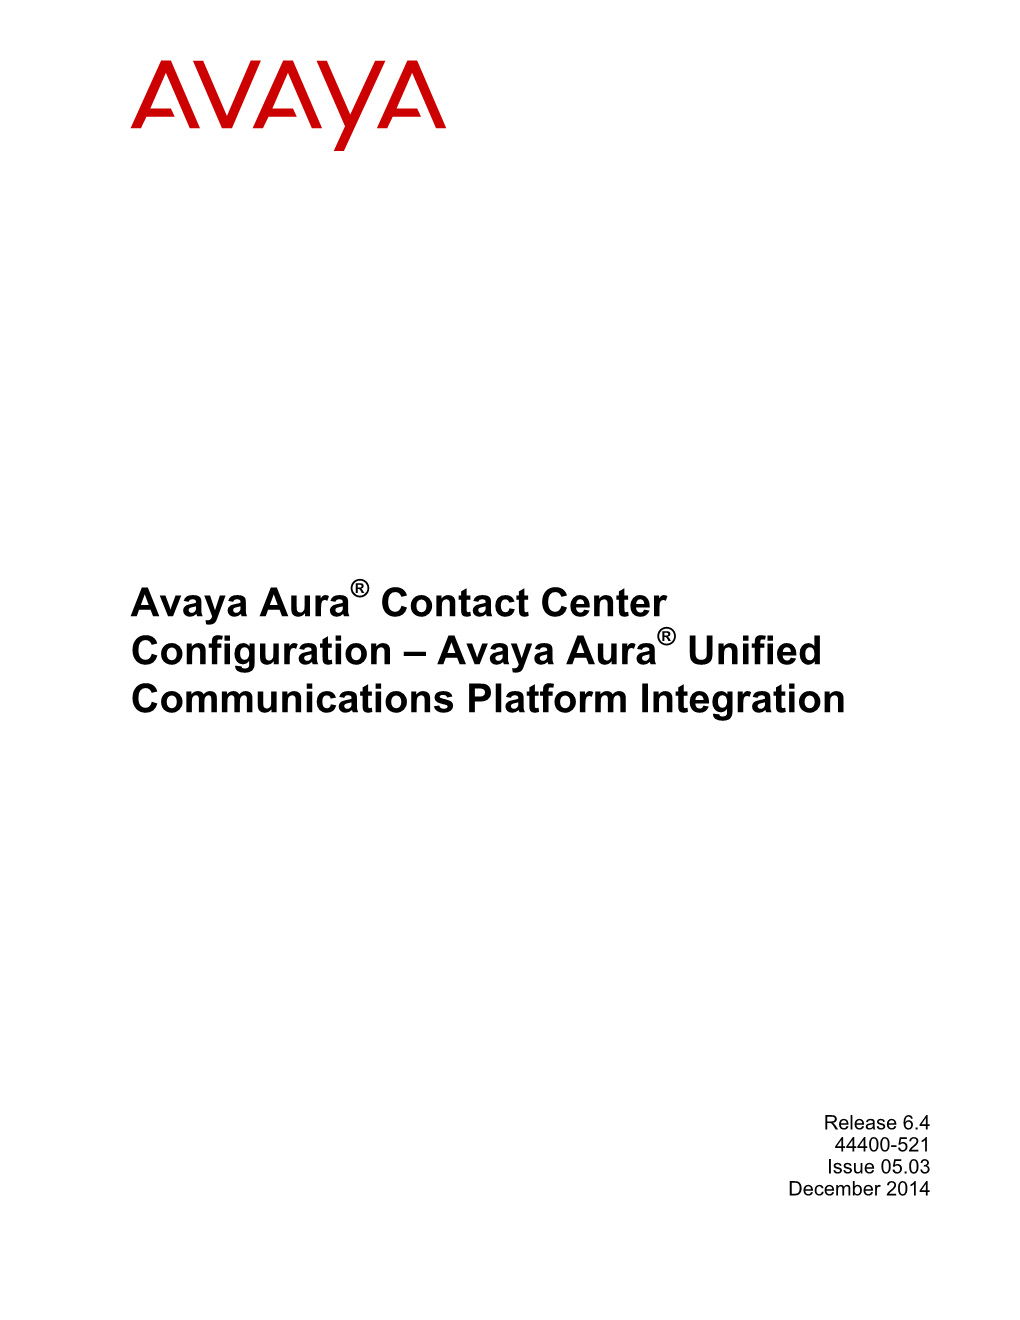 Avaya Aura Contact Center Configuration on Page 173